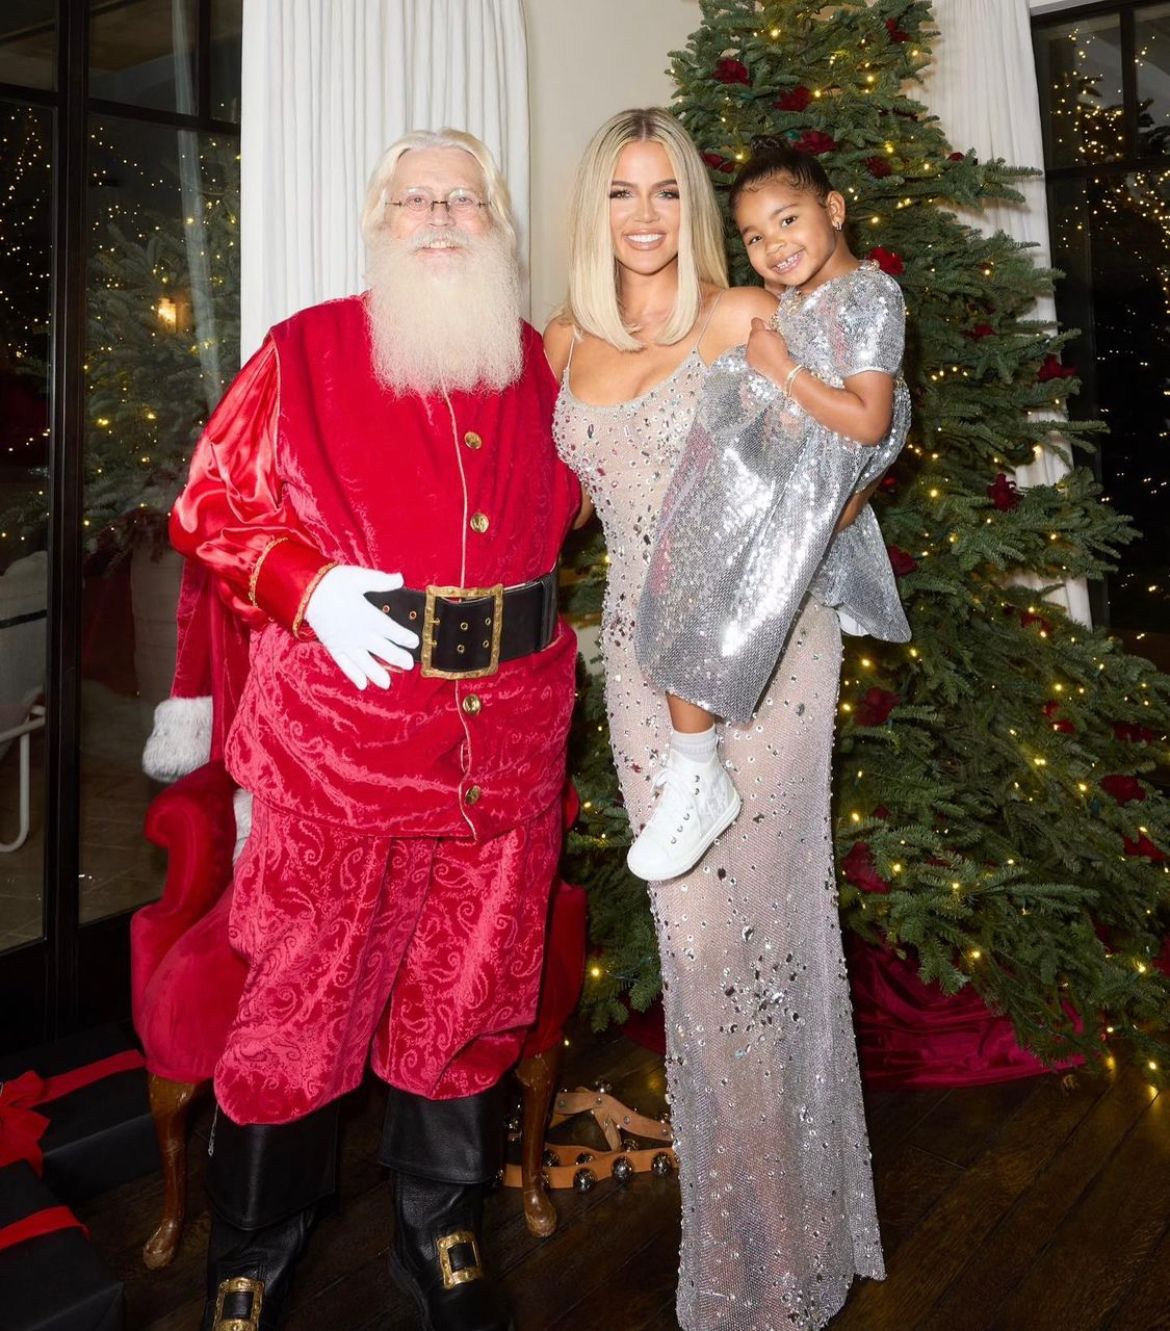 Khloe Kardashian and True Thompson with Santa Claus